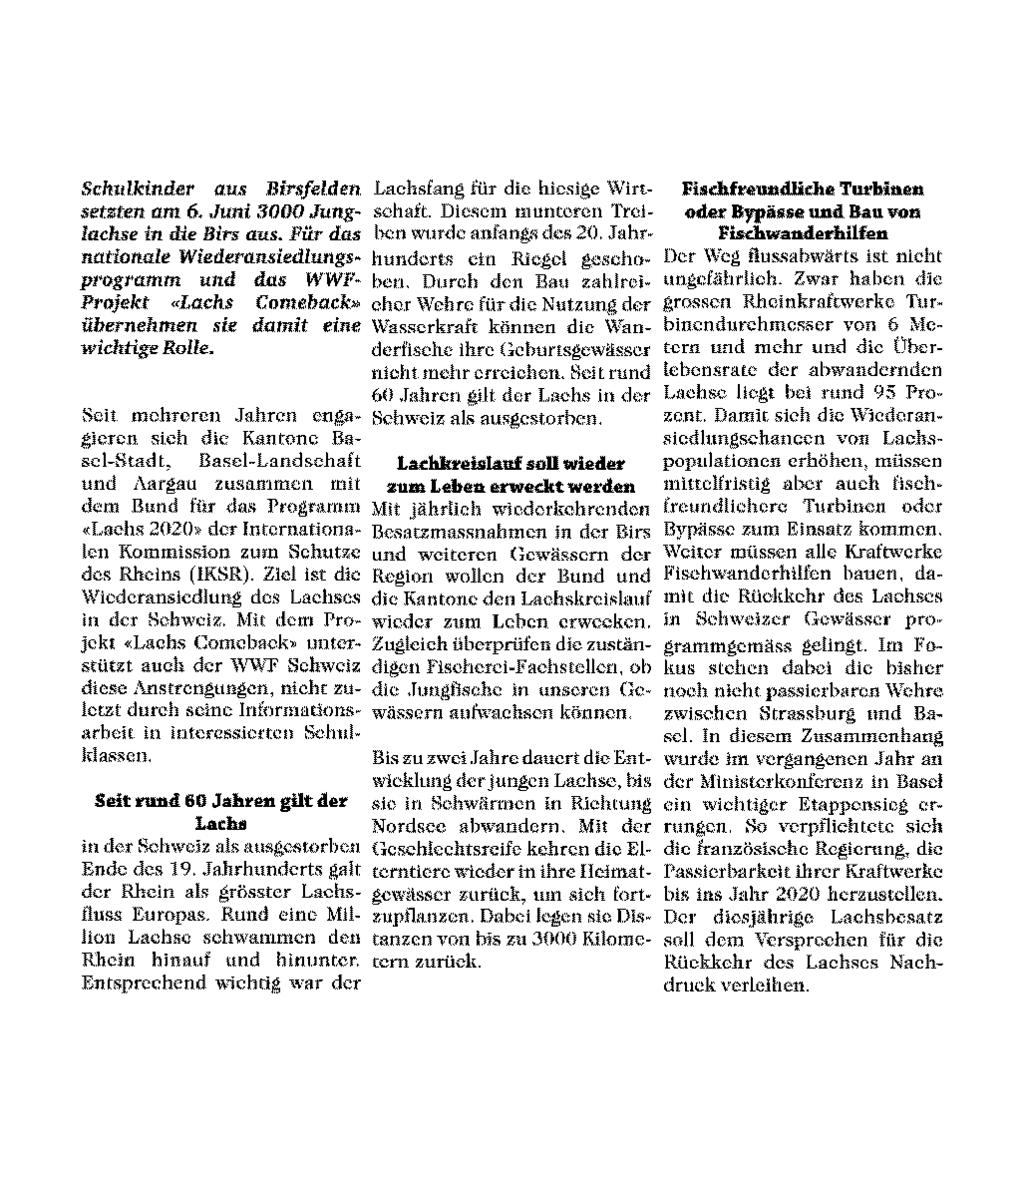 Datum: 20.06.2014 Bericht Seite: 4/26 Baselland Zeitung 4612 Wangen b. Olten 061 902 00 15 www.basellandzeitung.